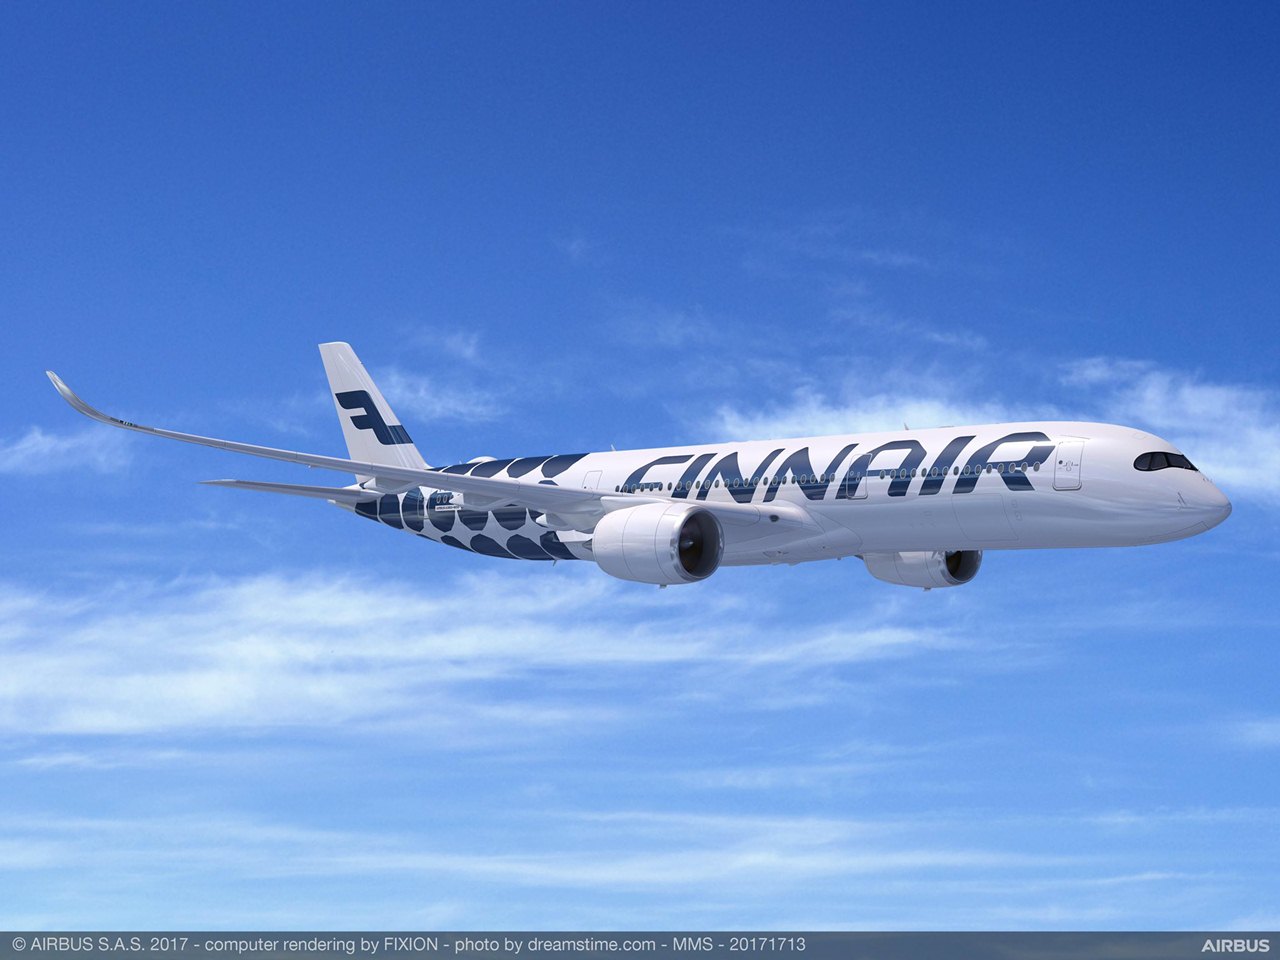 Rendering do Airbus A350 d Finnair com pintura da Marimekko